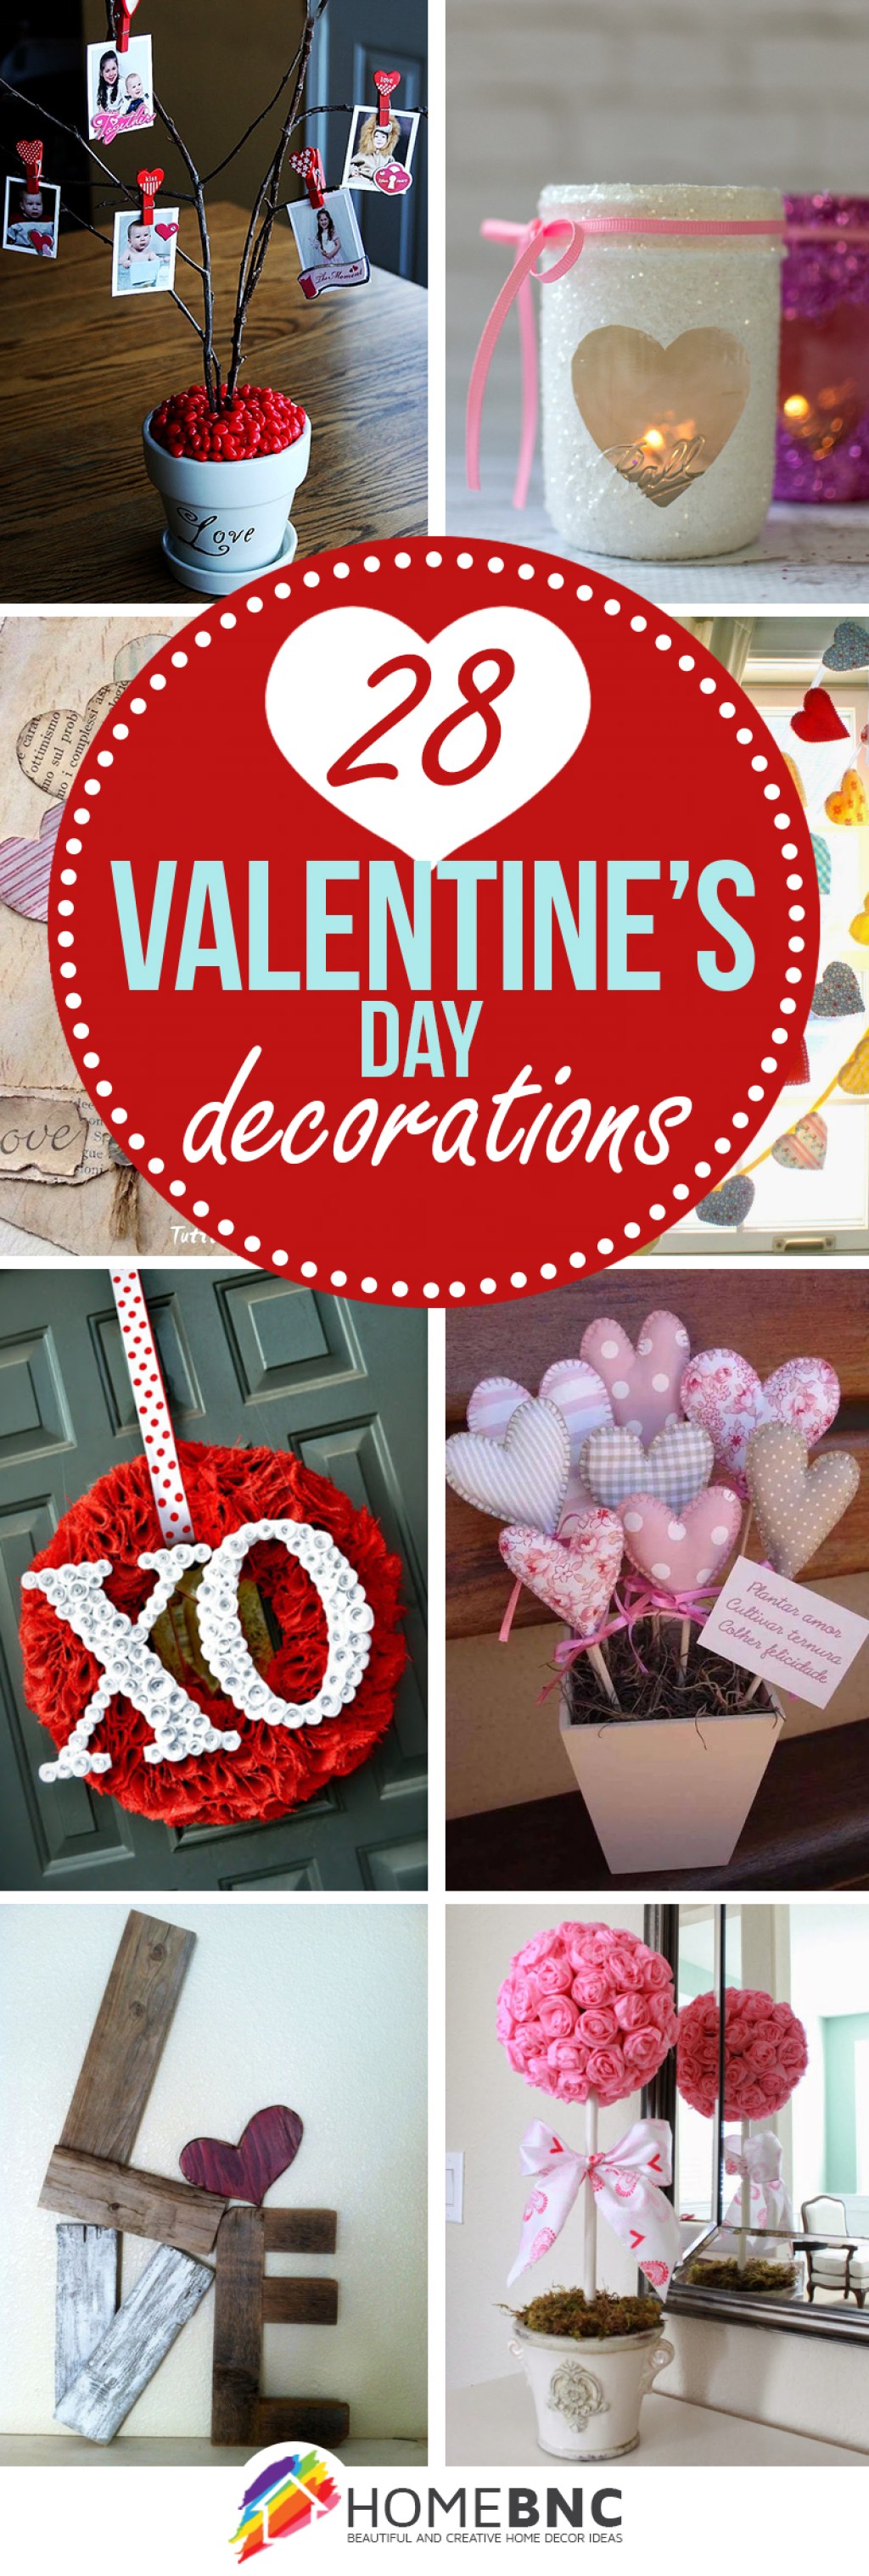 creative romantic decorations - Best Valentine